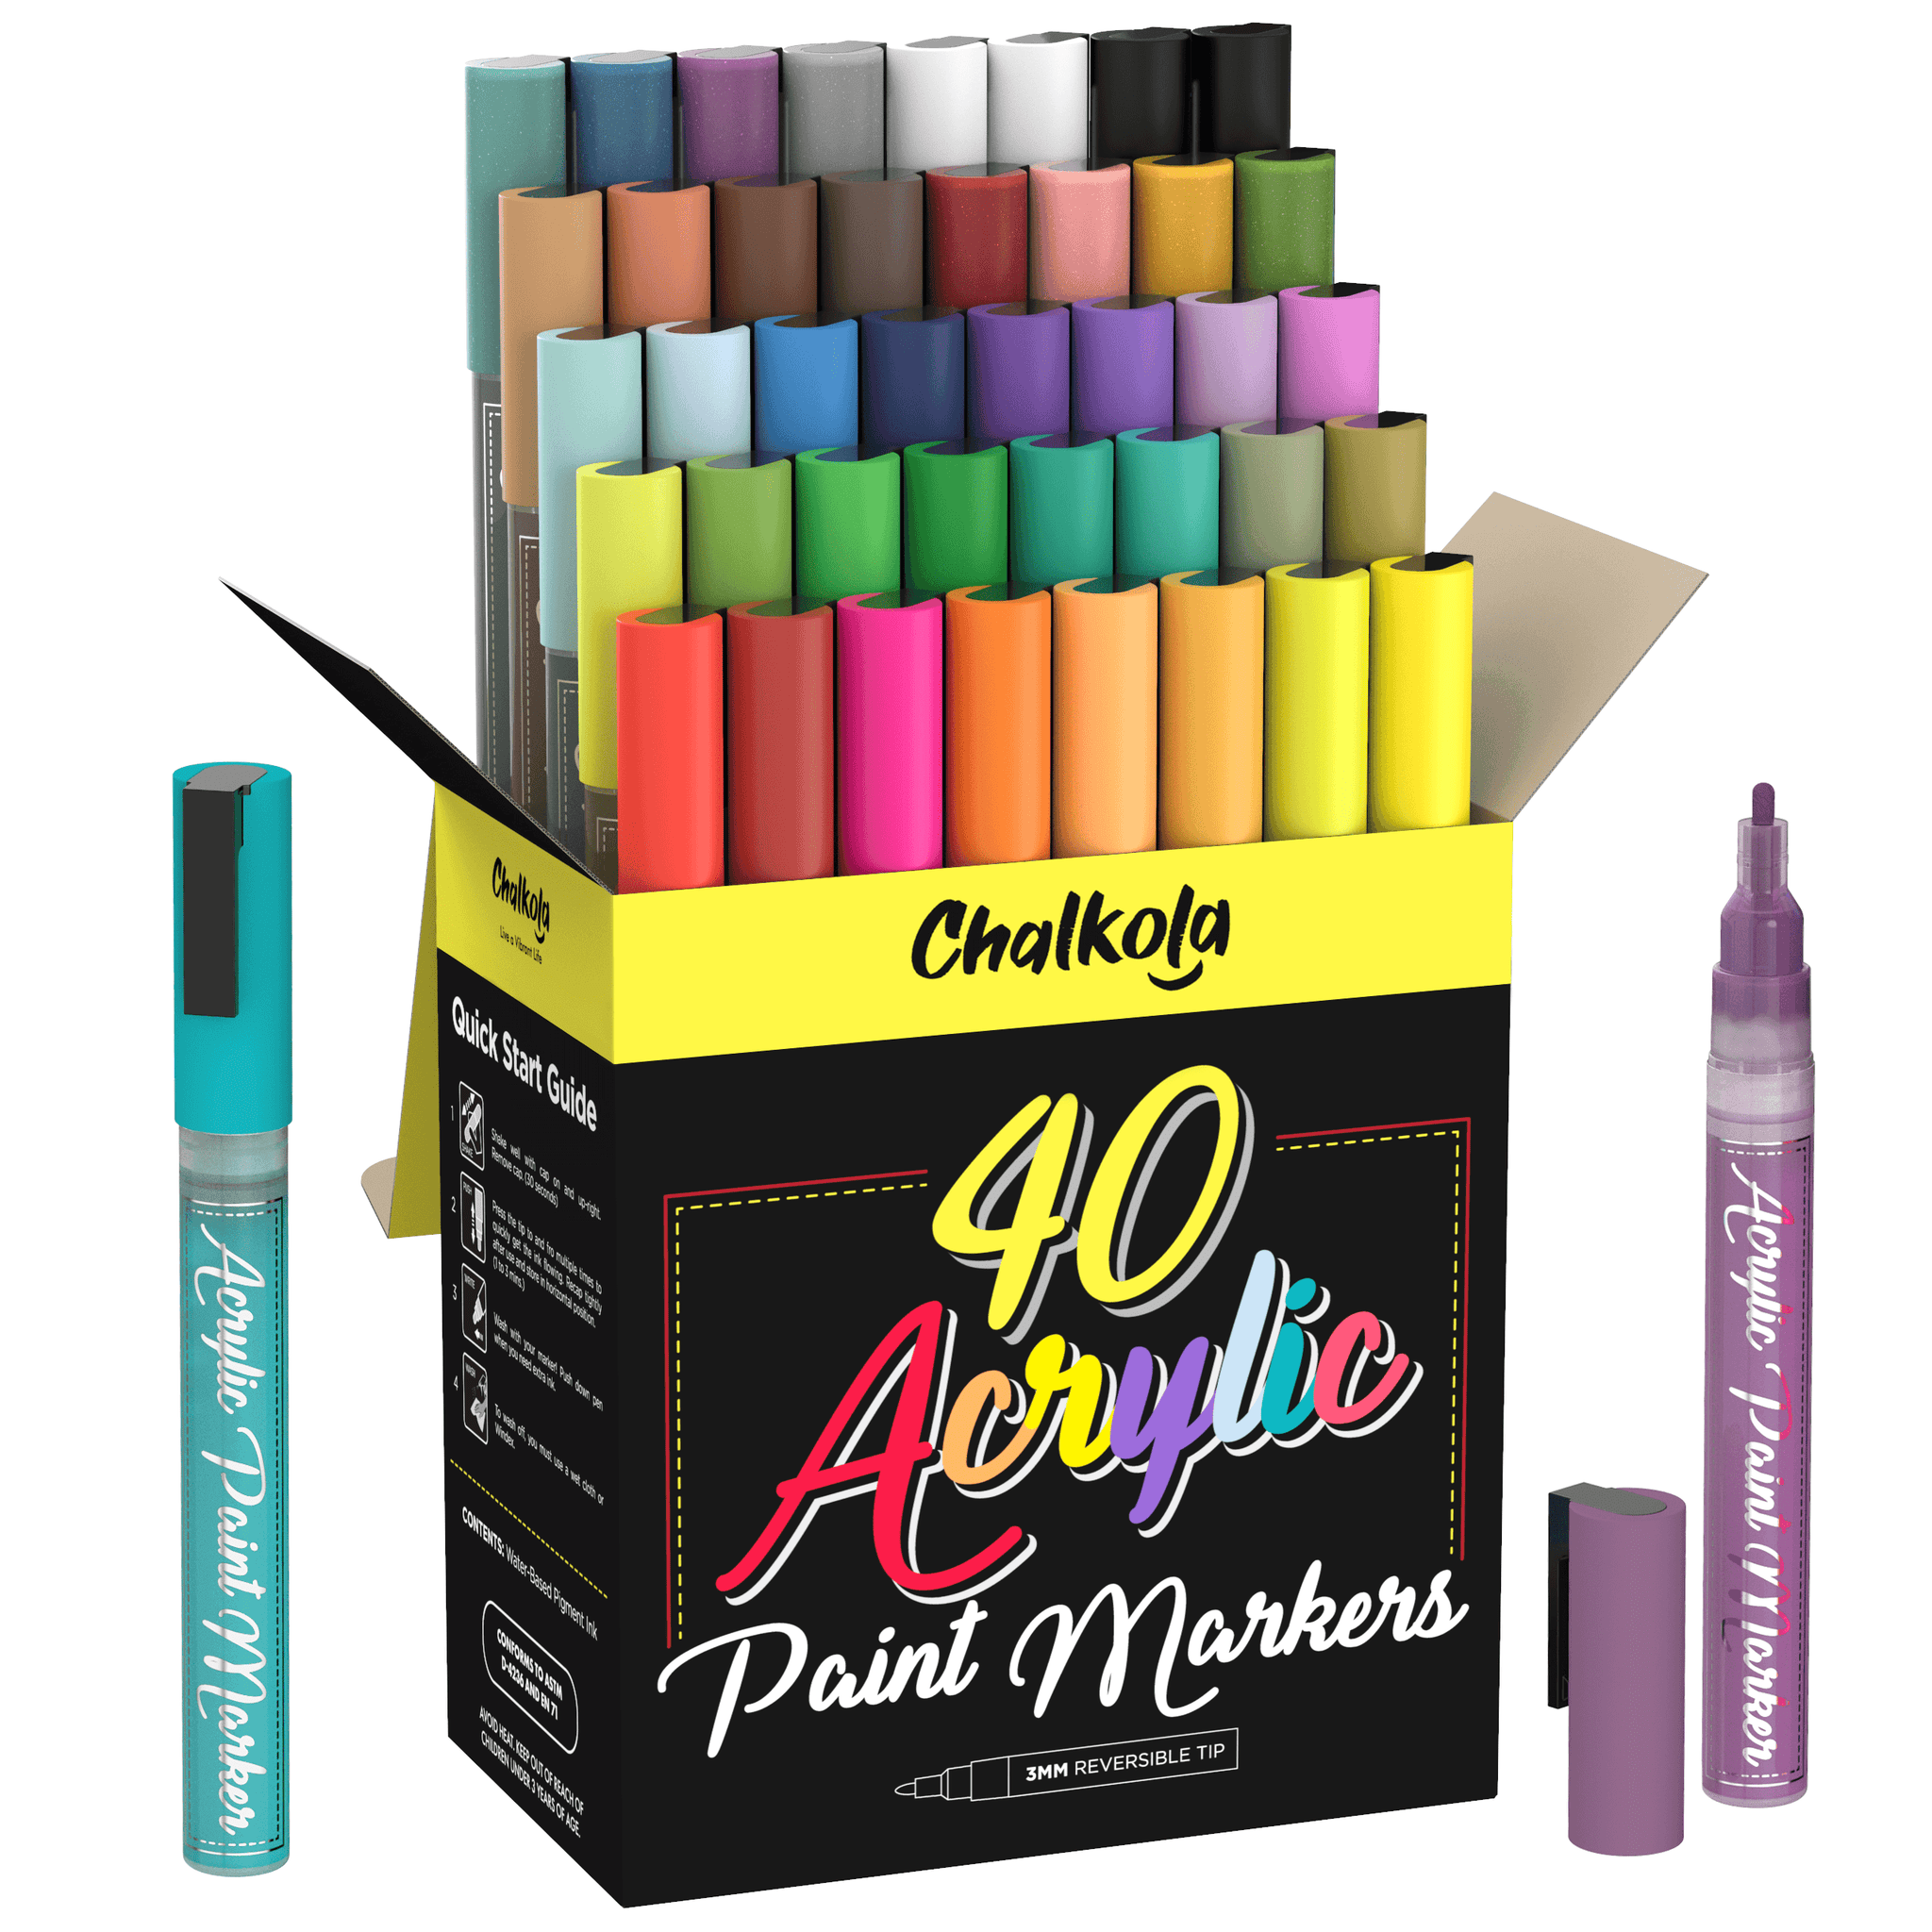 TOOLI-ART acrylic paint markers paint pens special colors set